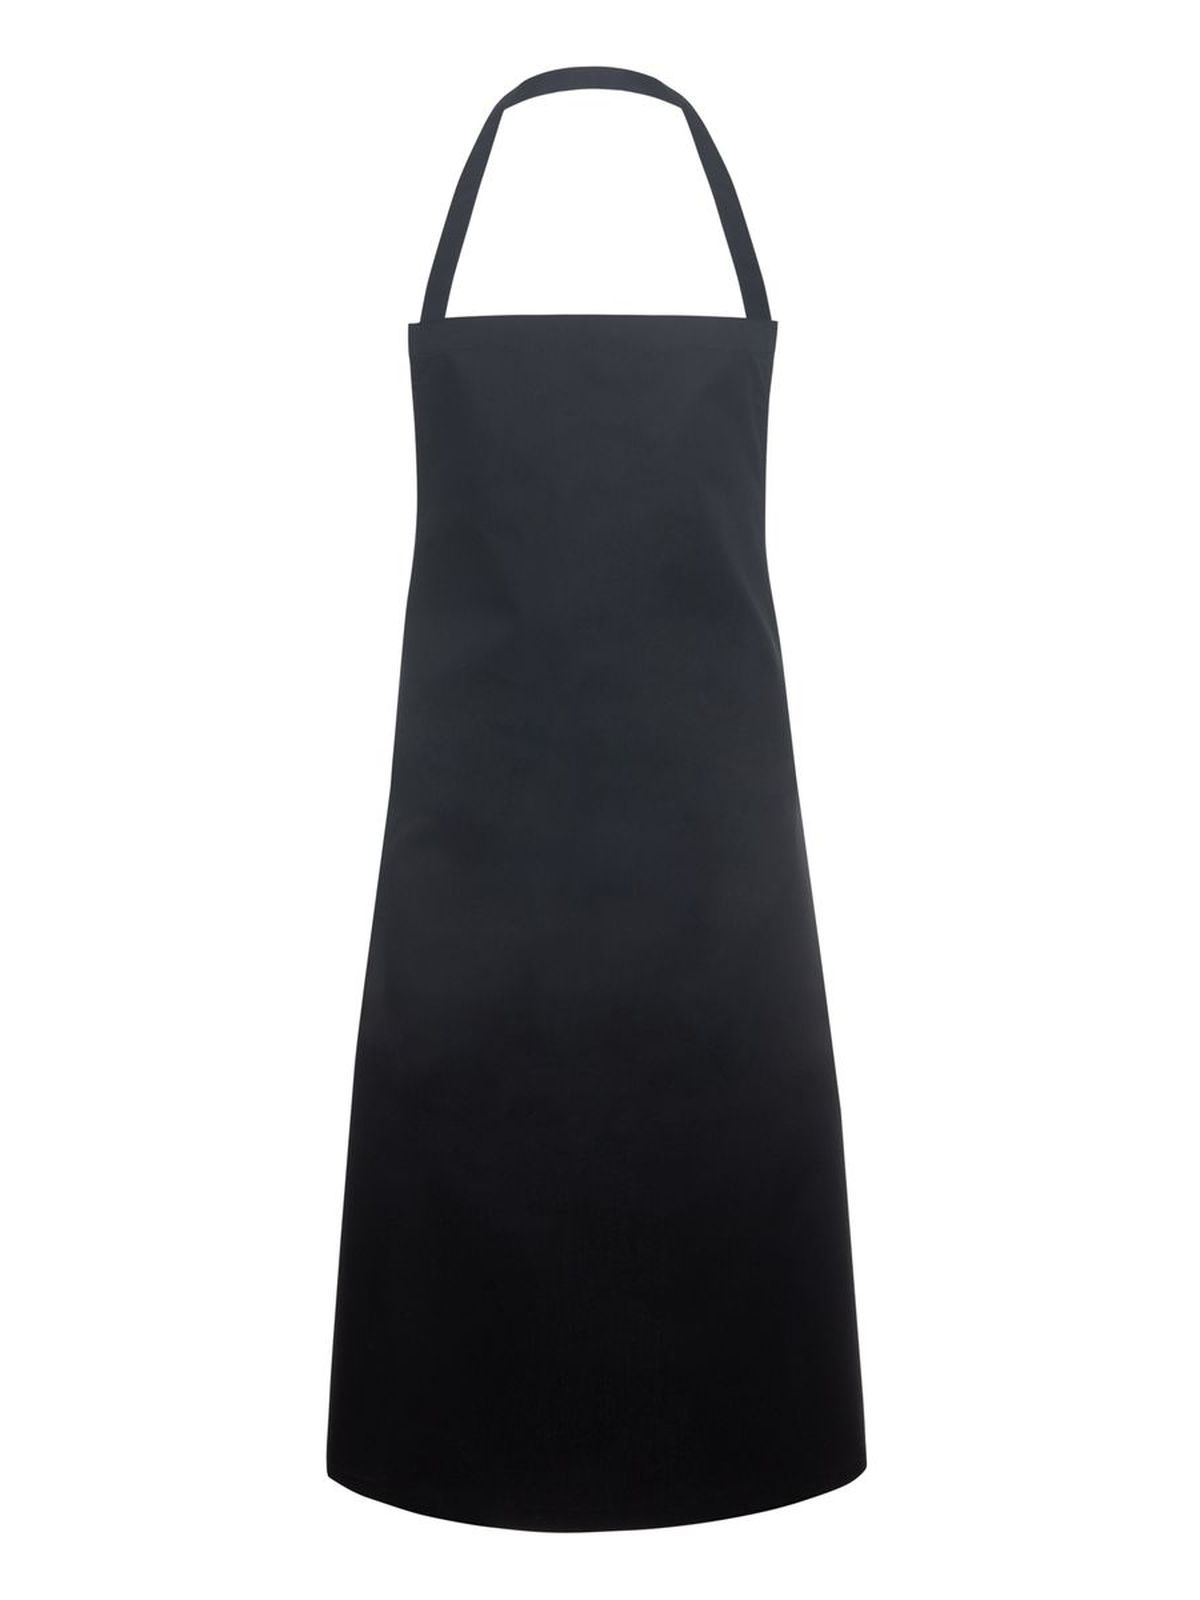 bib-apron-basic-75-x-100-cm-black.webp